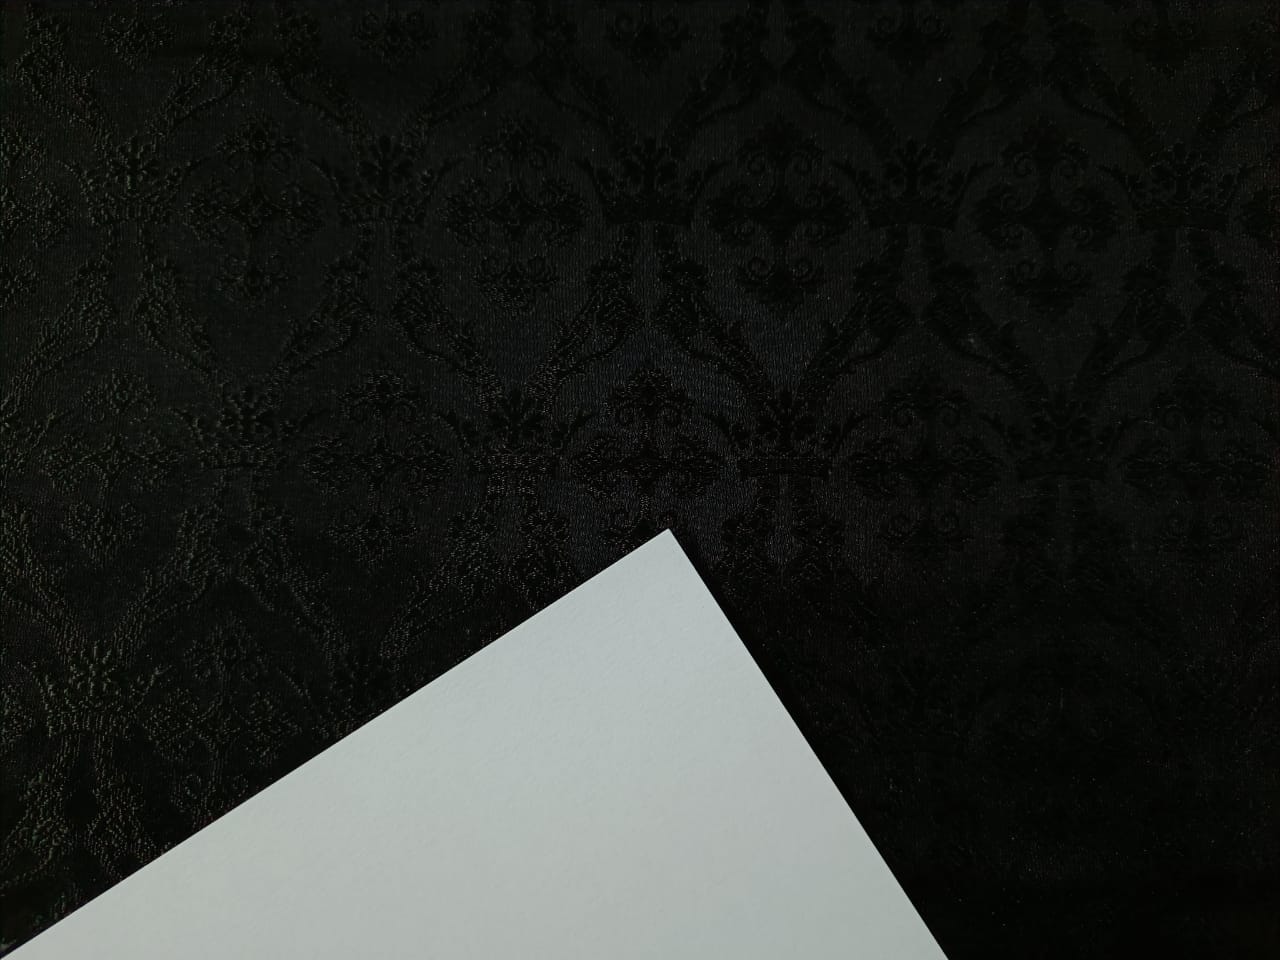 SILK BROCADE FABRIC Black Vestment design Color 44" wide BRO293[3]